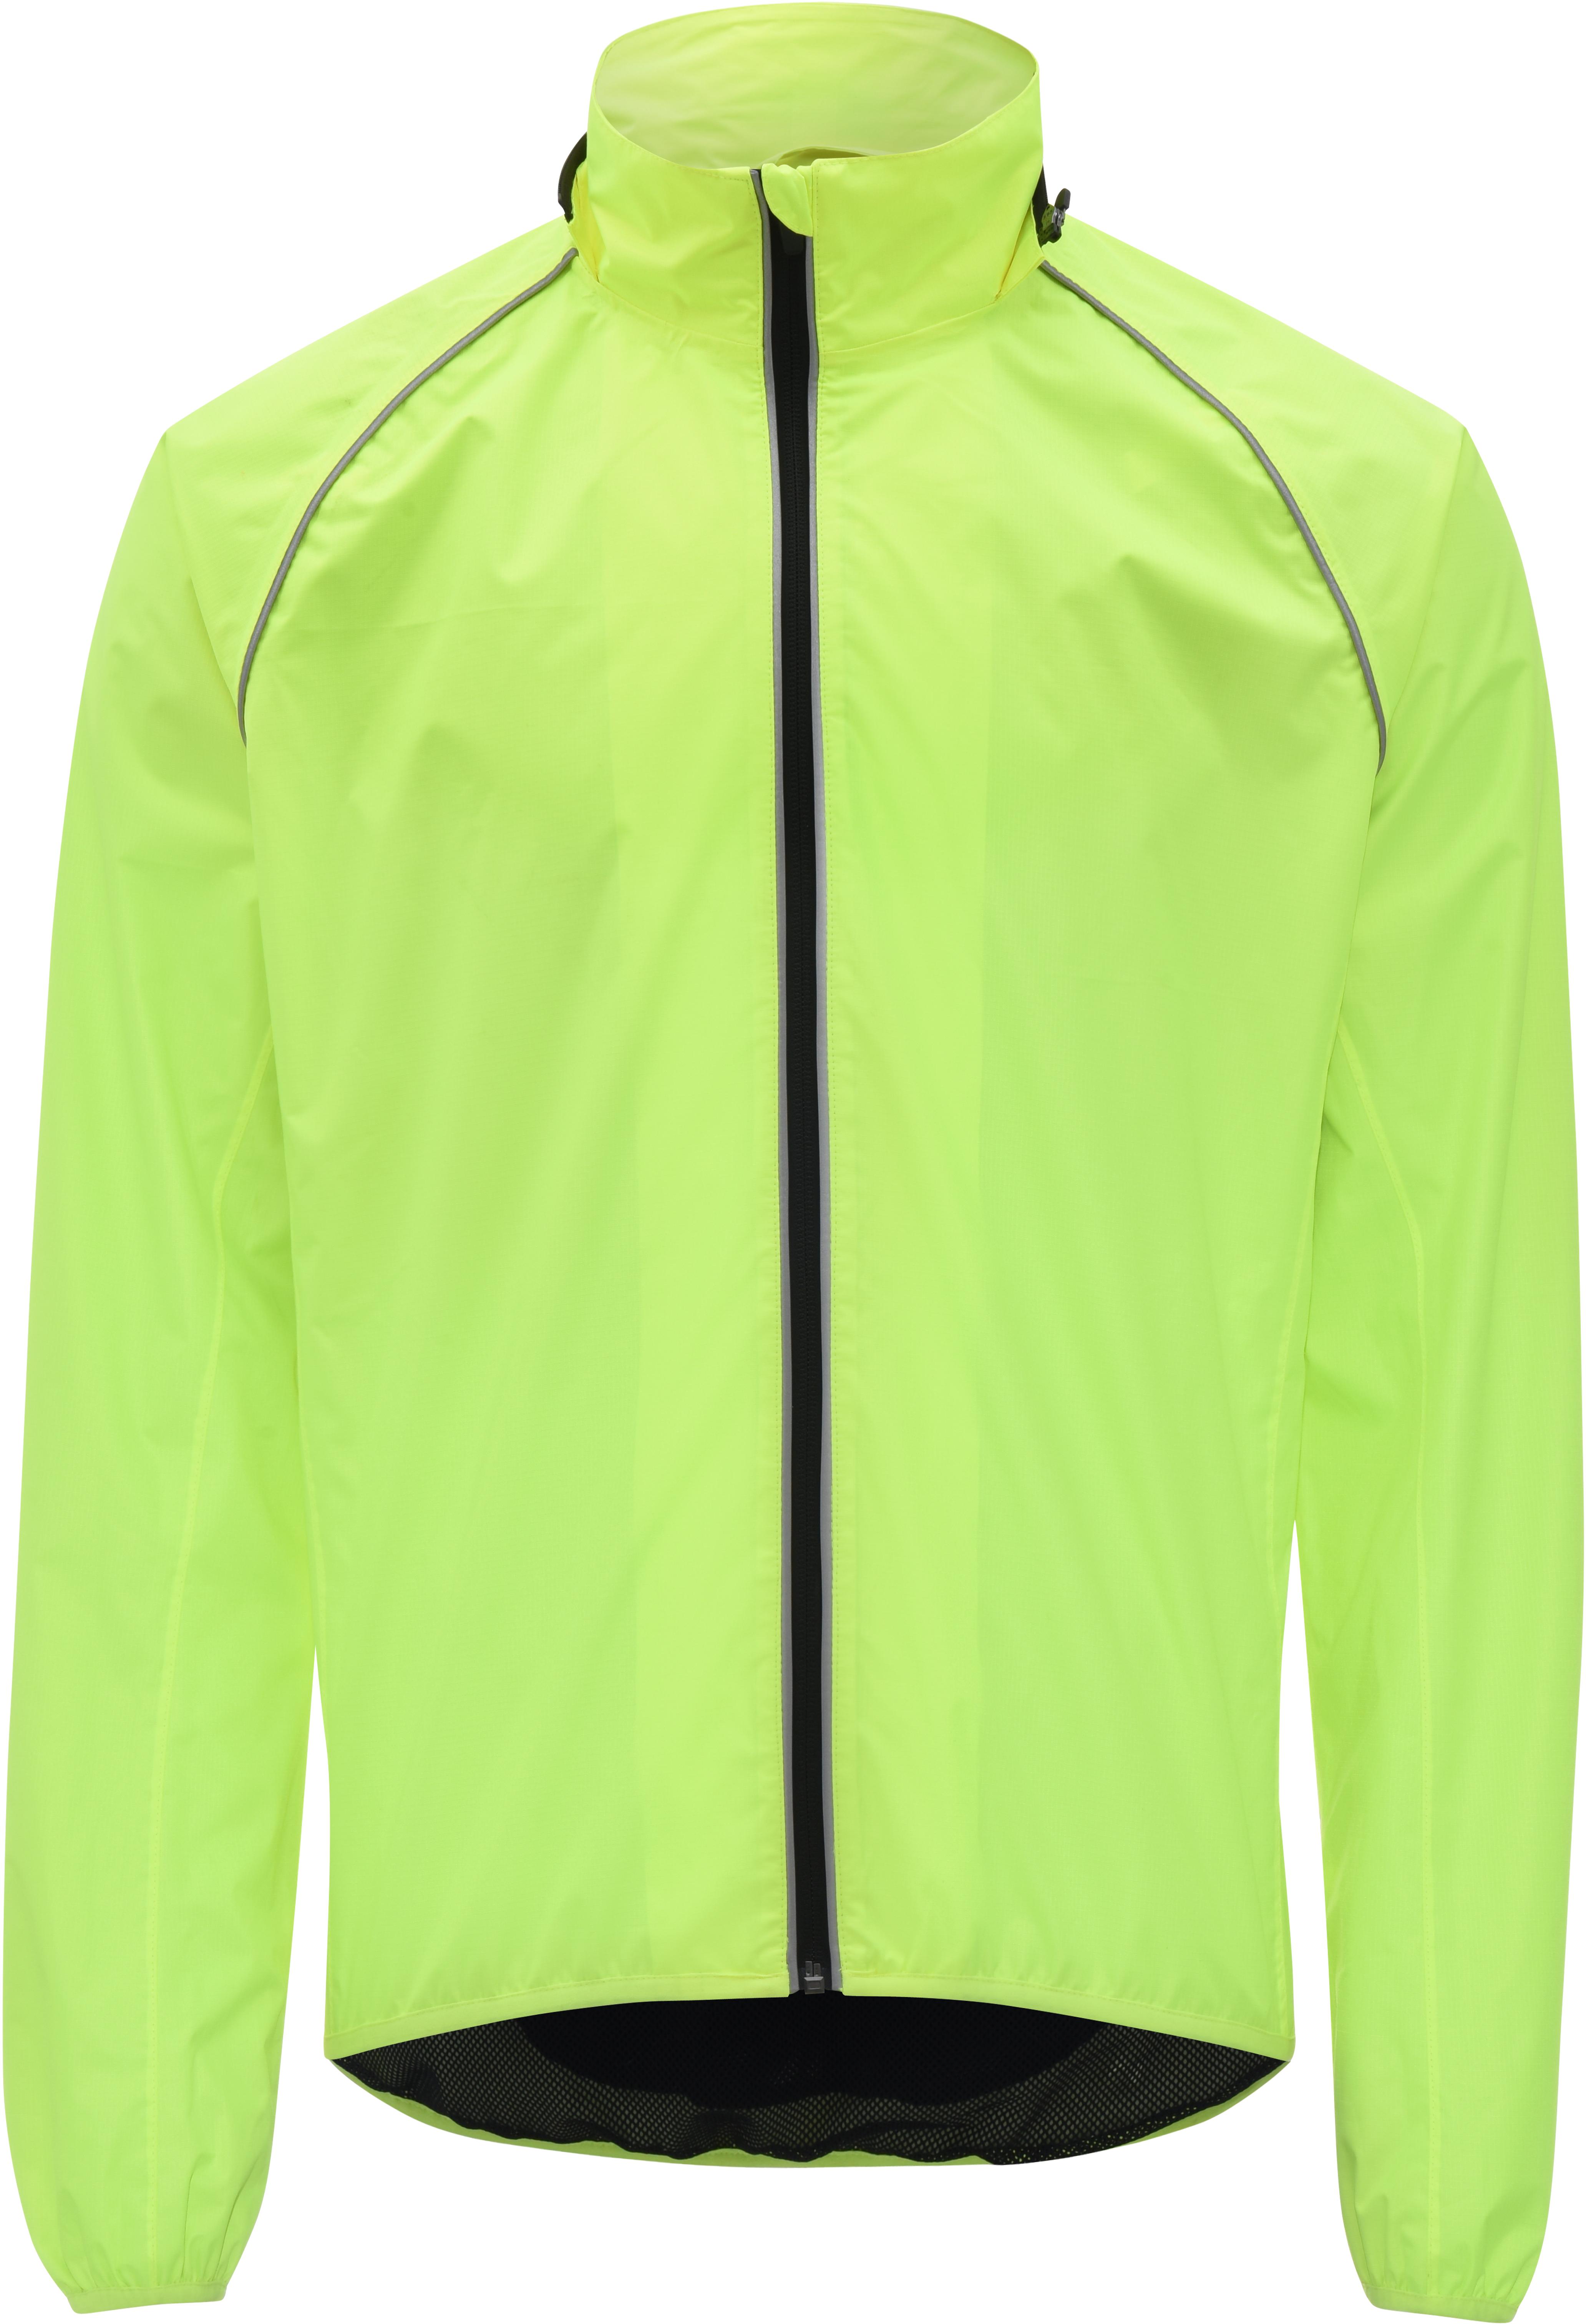 Ridge Unisex Waterproof Jacket - Fluorescent Yellow, L